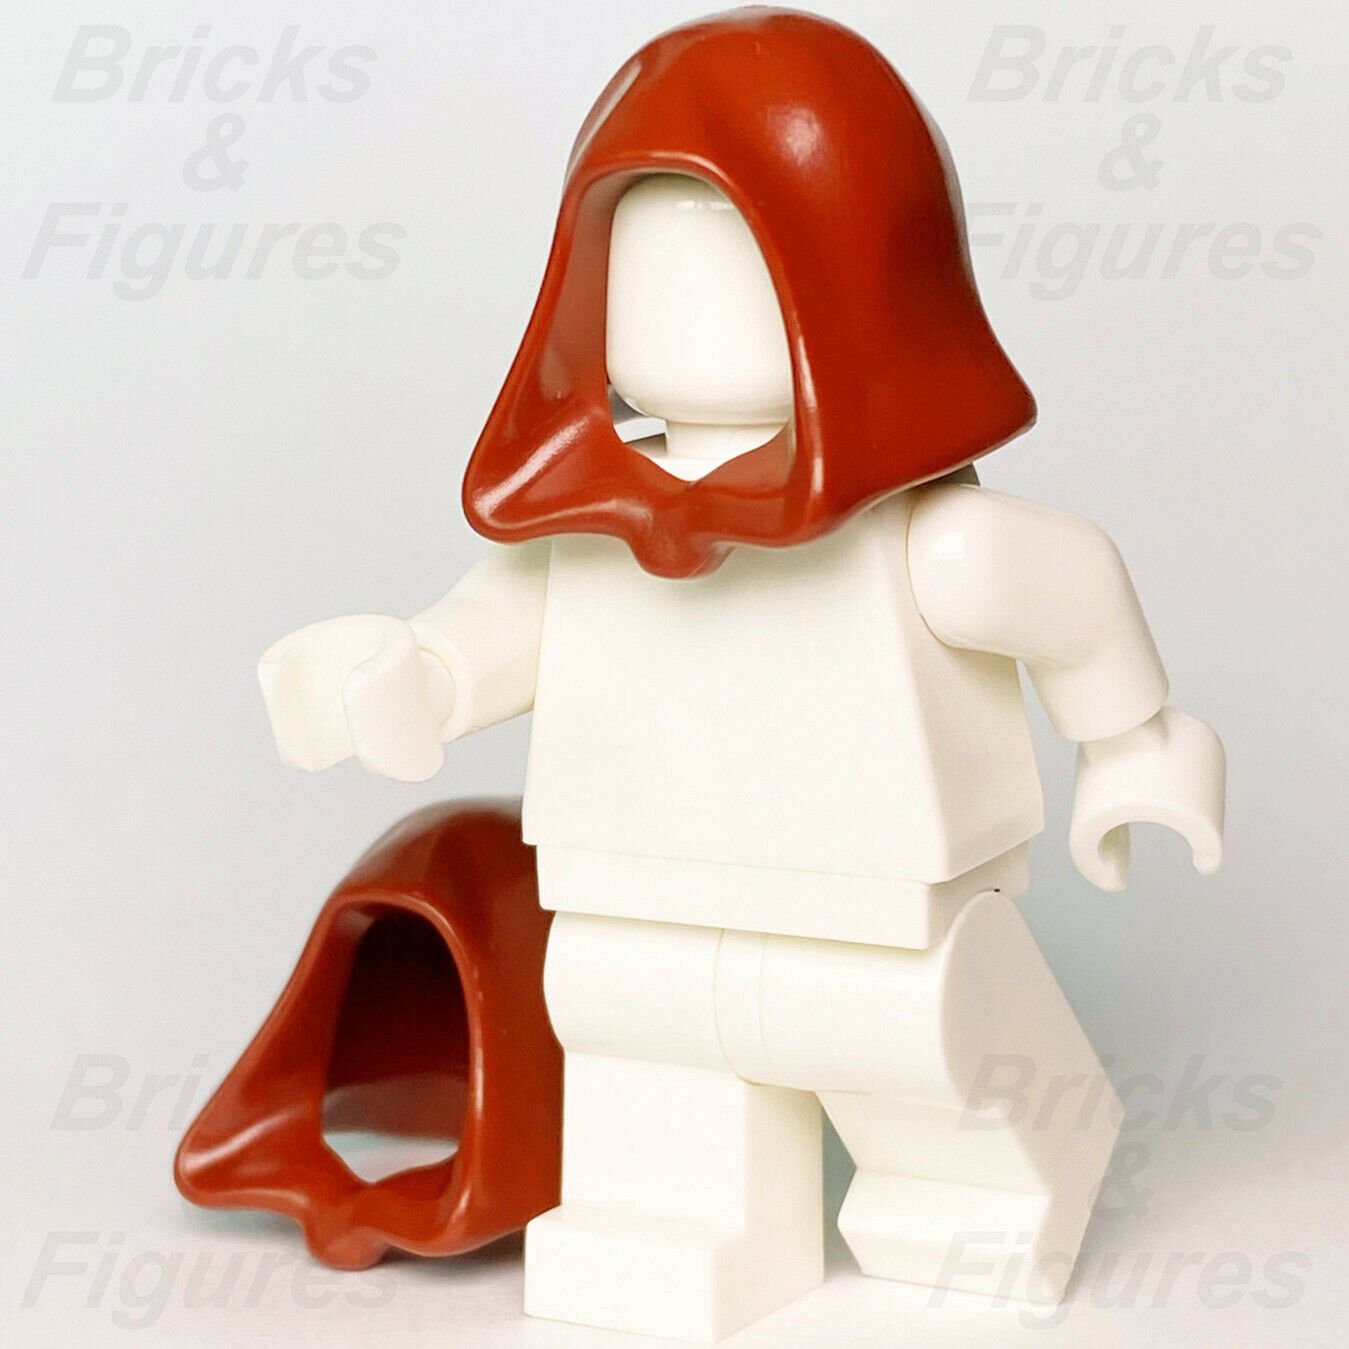 2 x Star Wars LEGO Dark Red Robe Hoods Minifigure Headgear Parts 30381 96232 - Bricks & Figures